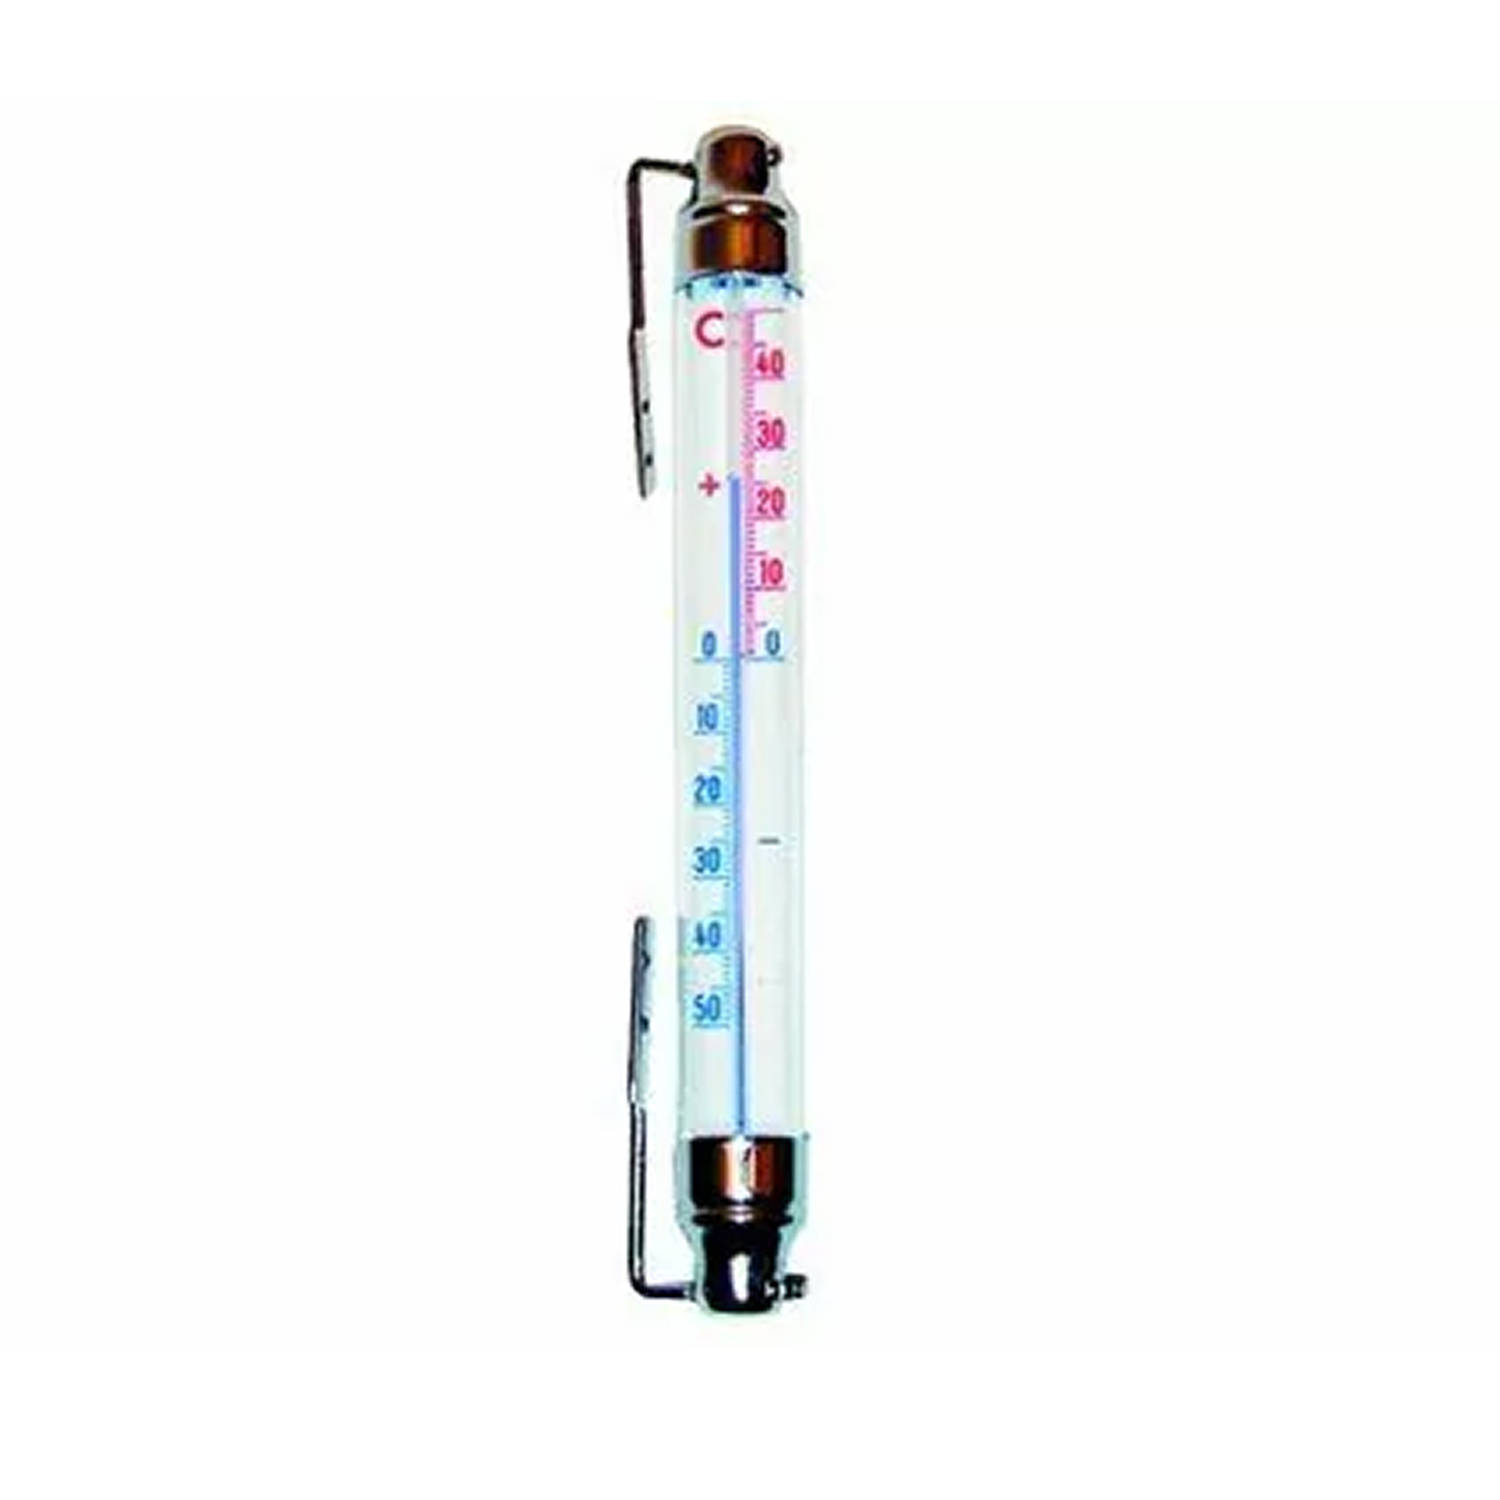 Raamthermometer - Metaal - 20 Cm - Buitenthermometers